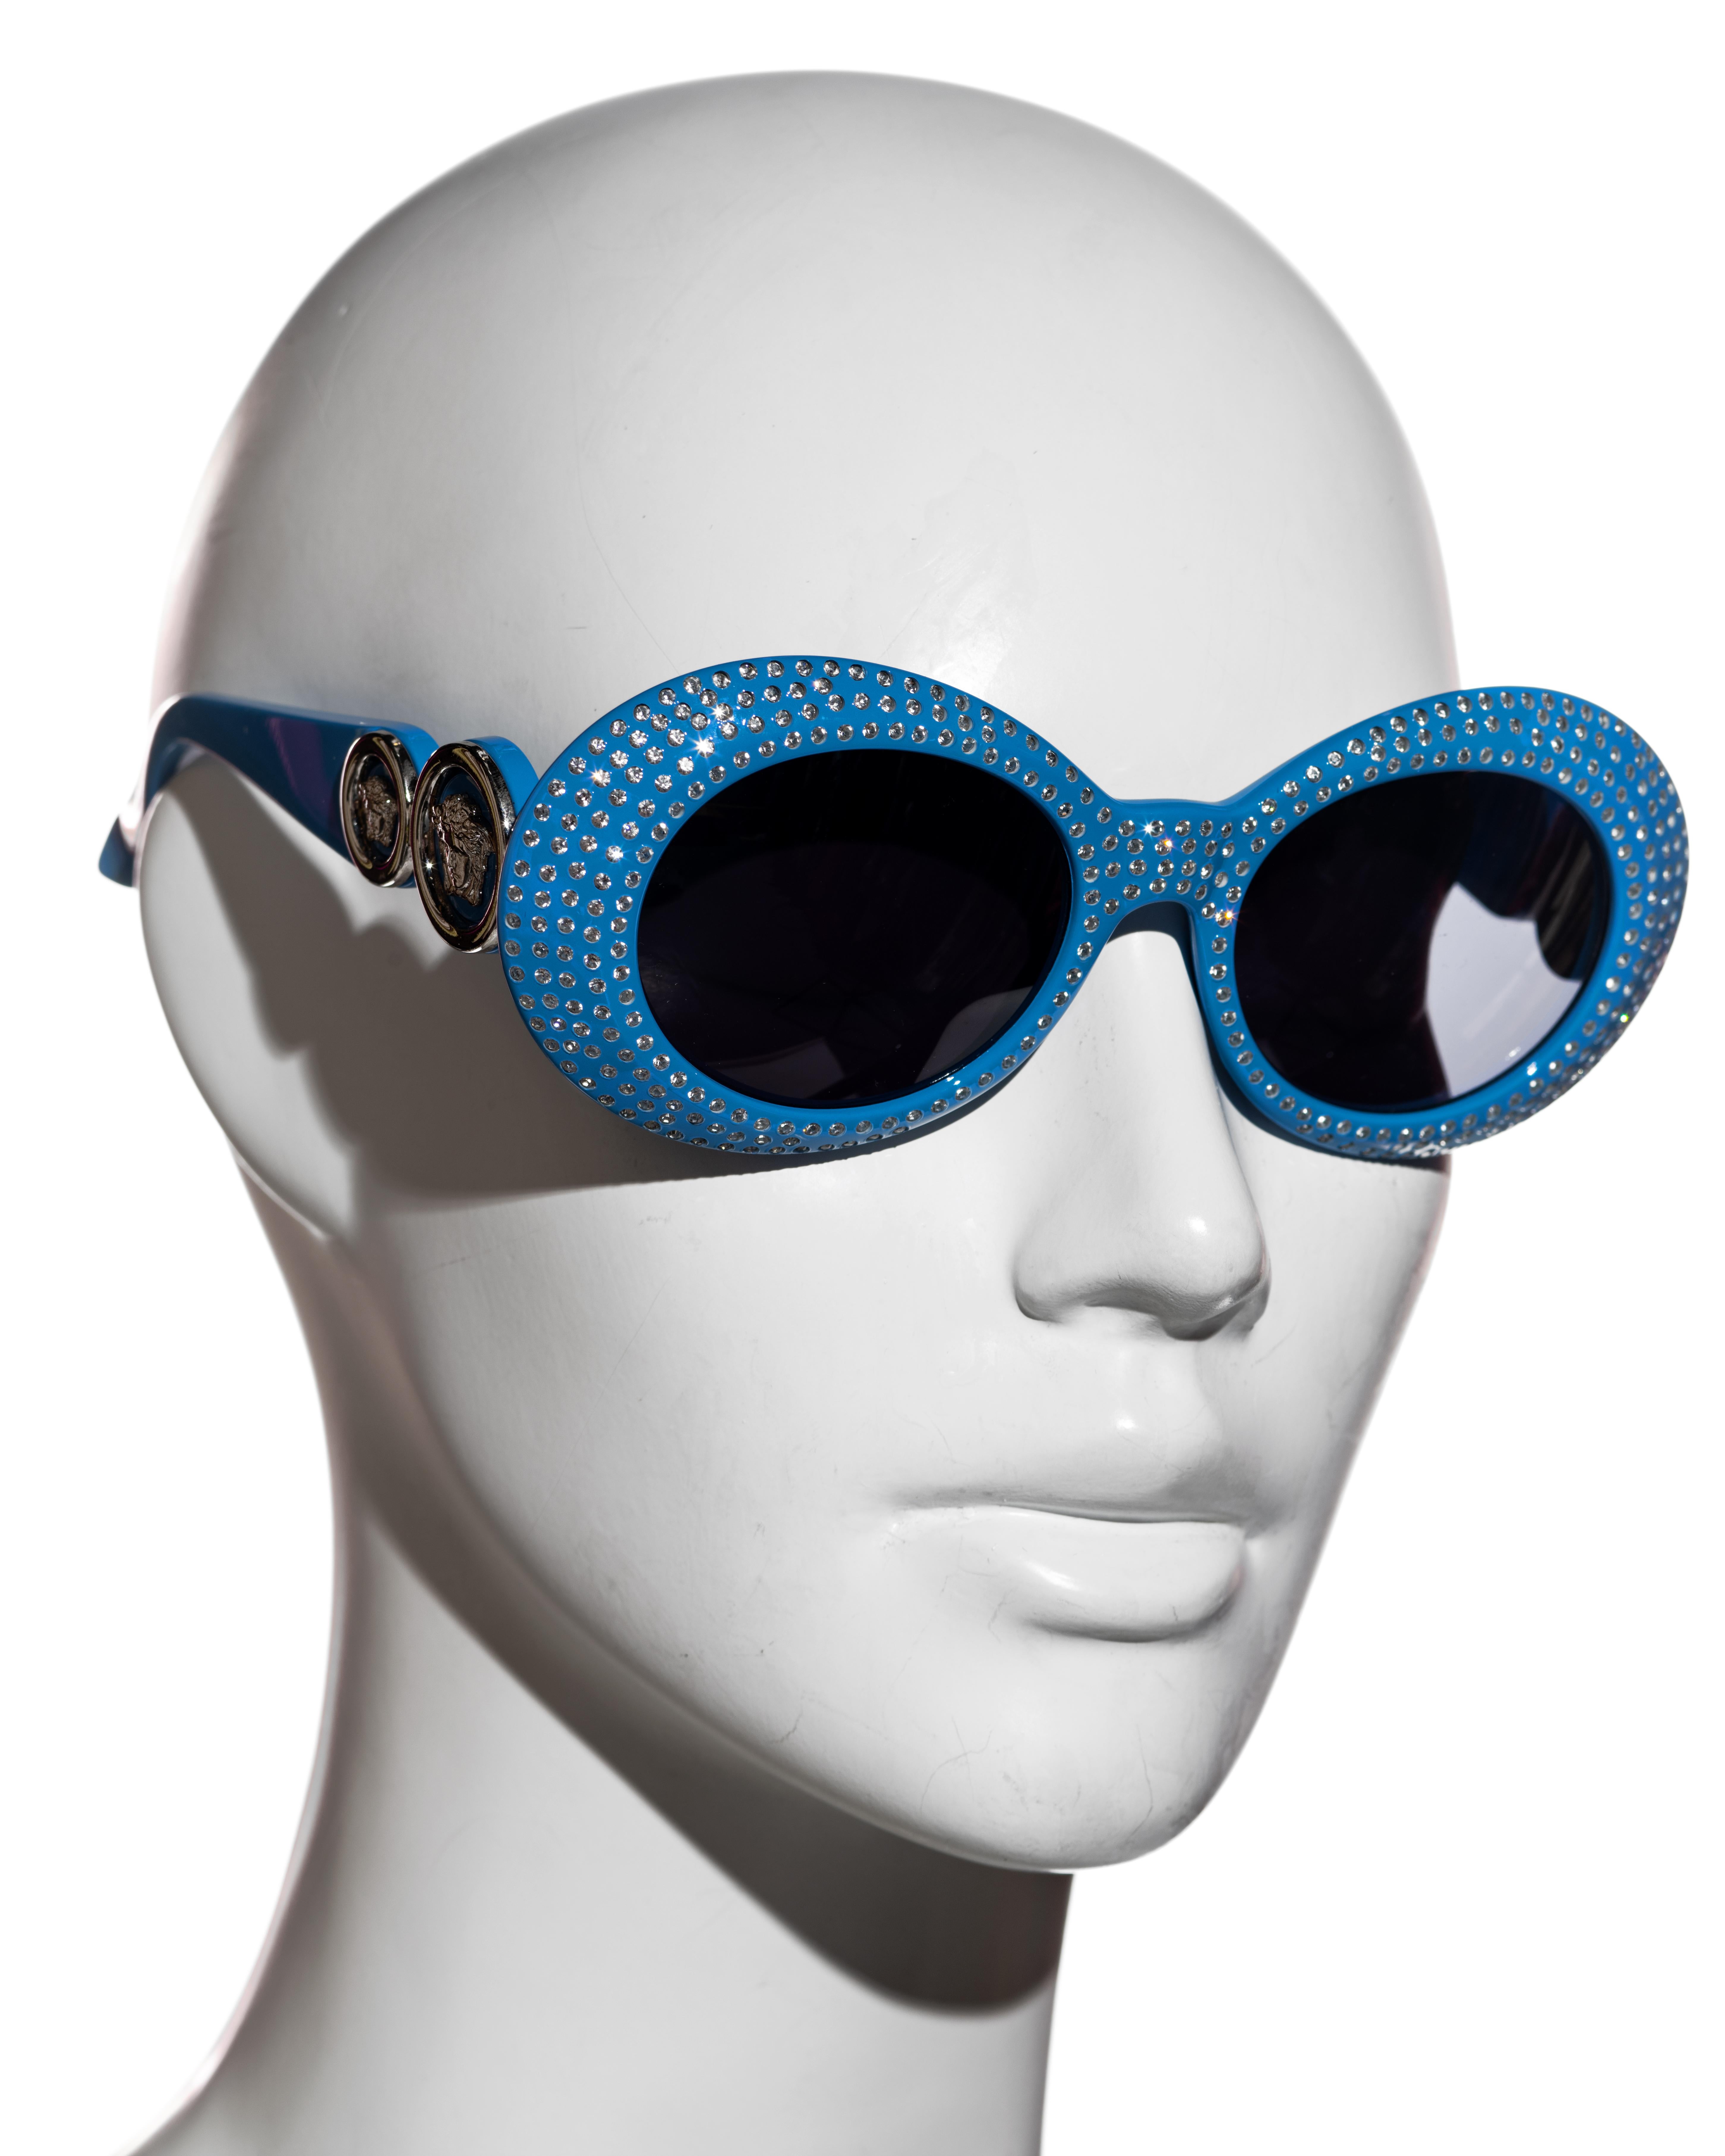 ▪ Gianni Versace unisex blue rhinestone sunglasses 
▪ Large round frames
▪ Dark lenses 
▪ Silver Medusa detail on the temples 
▪ Fall-Winter 1996